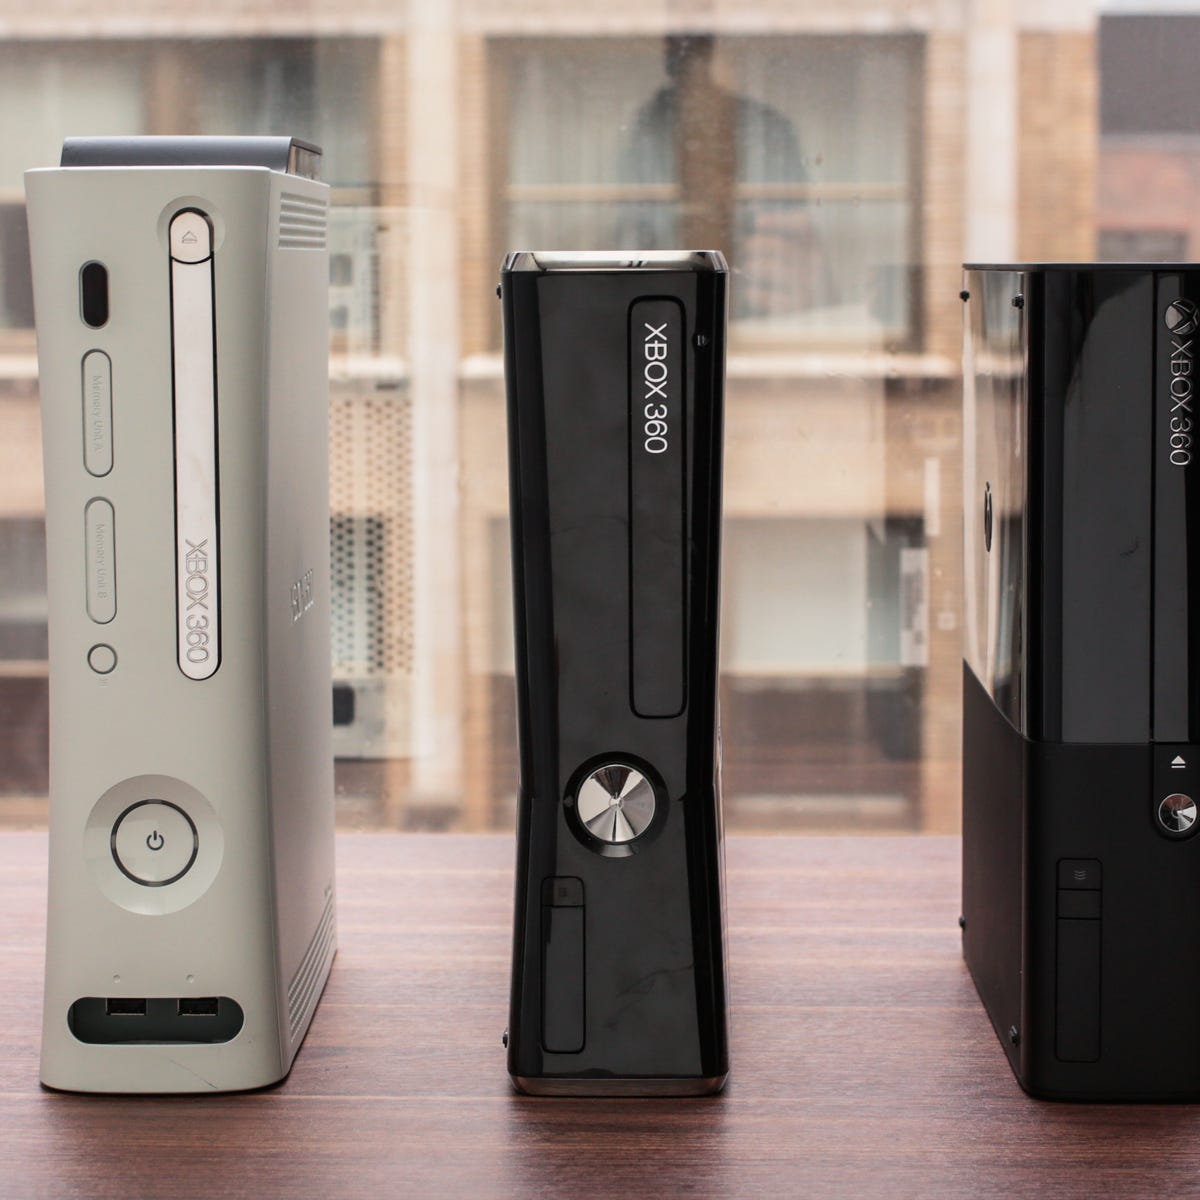 Meesterschap Morse code Verleiden Microsoft to support Xbox 360 until 2016 - CNET